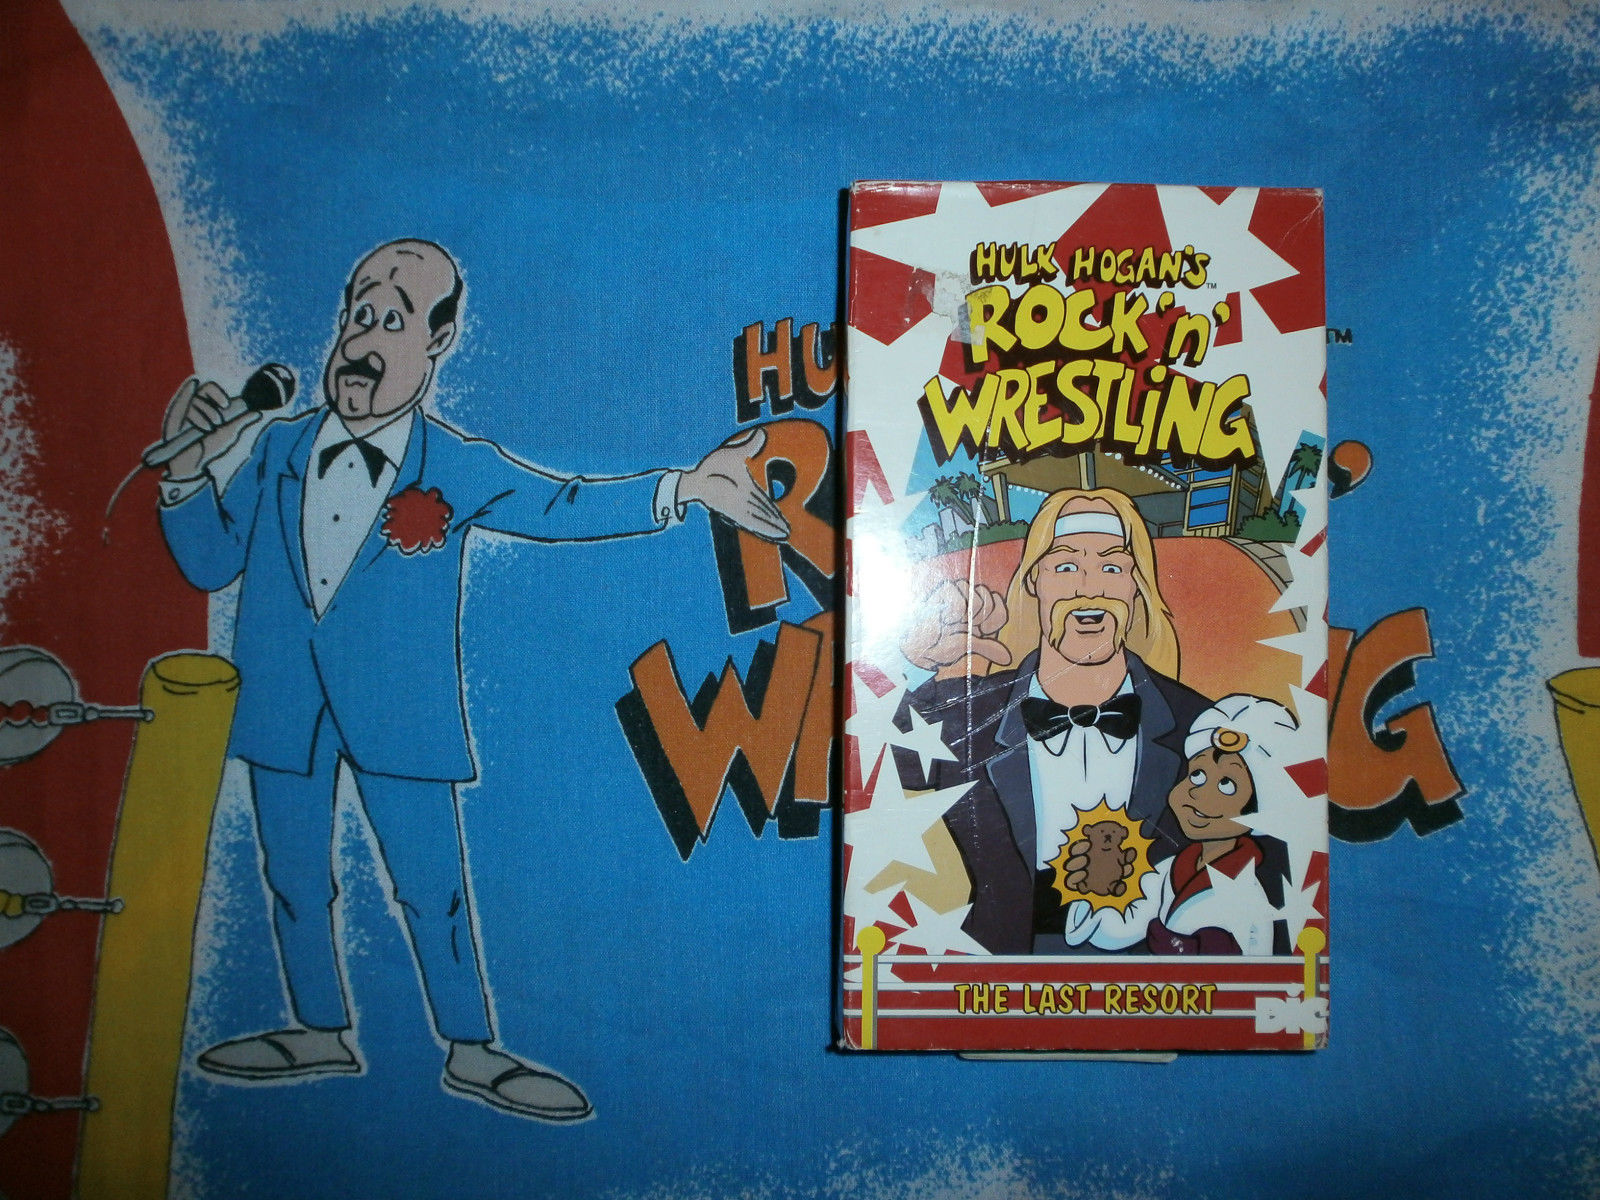 Hulk Hogan Rock 'n' Wrestling The Last Resort VHS video tape